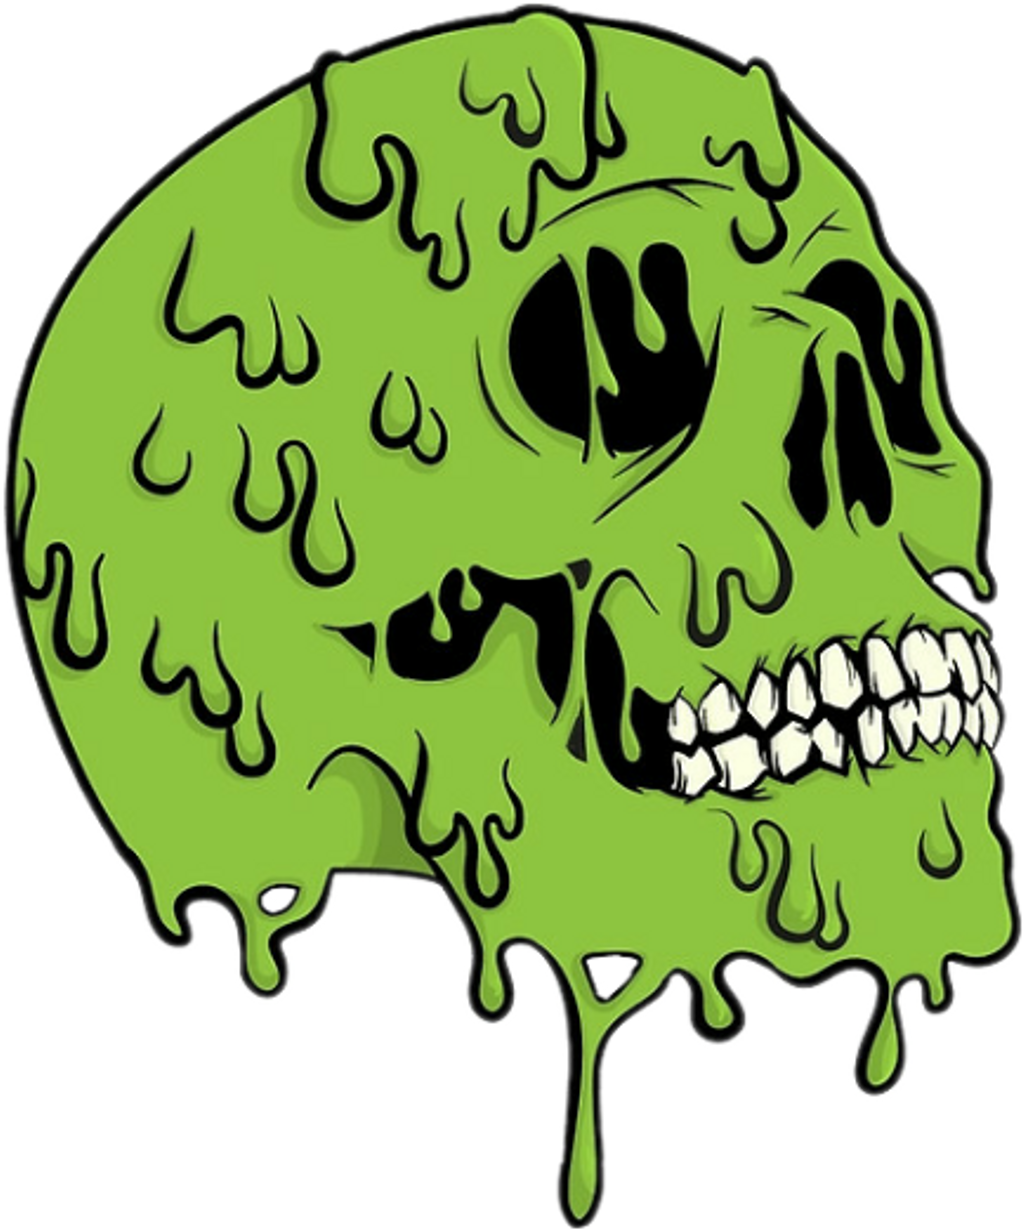 #skull #zombie #toxic #urban #cool #art #green #colors - Slime Skull (1024x1229)